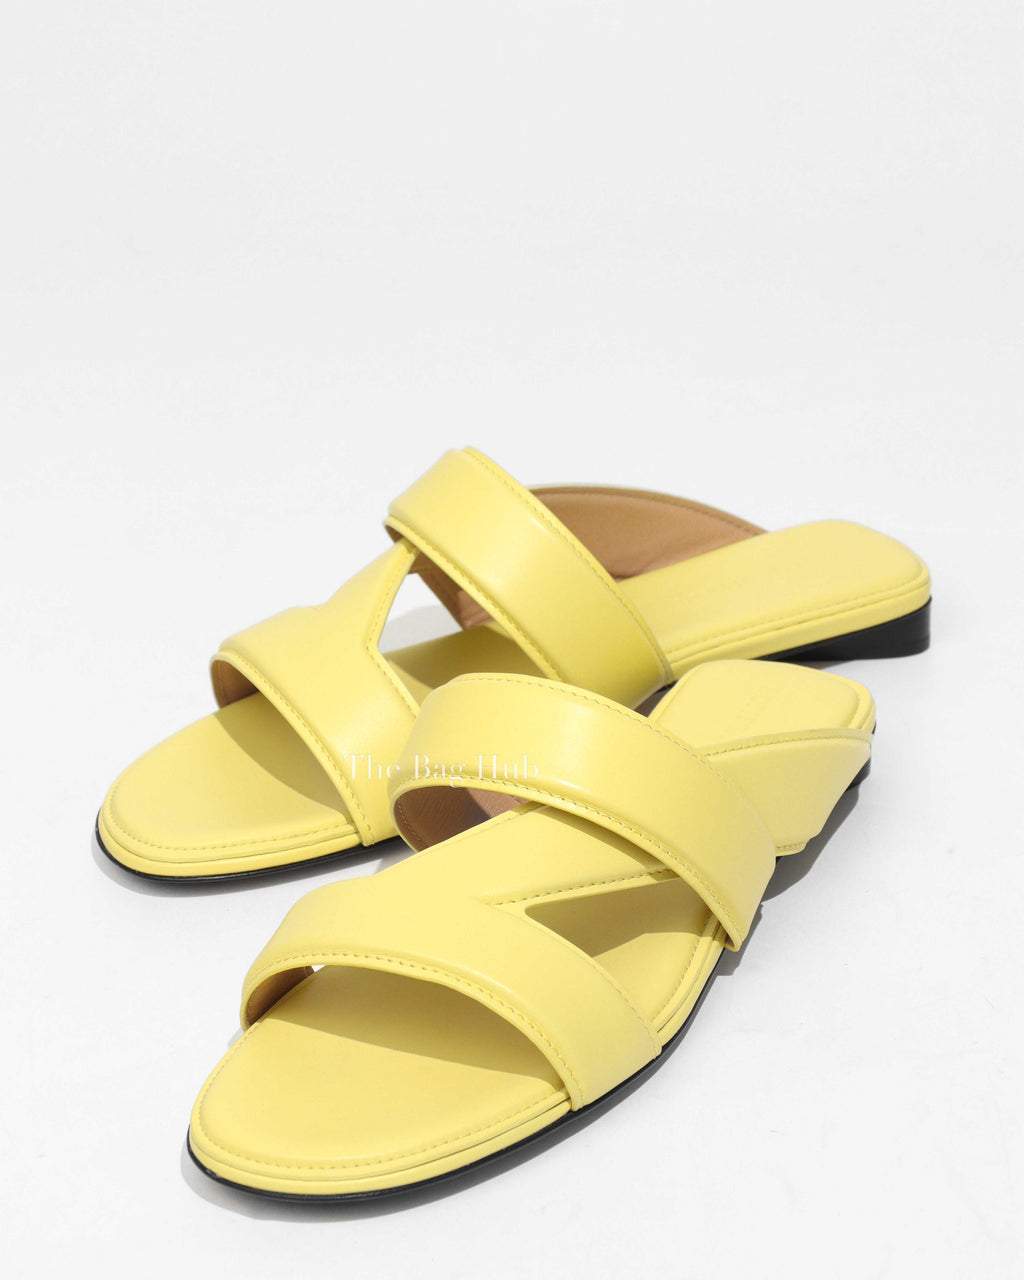 Bottega Veneta Light Yellow Leather Band Flat Sandals Size 38-1